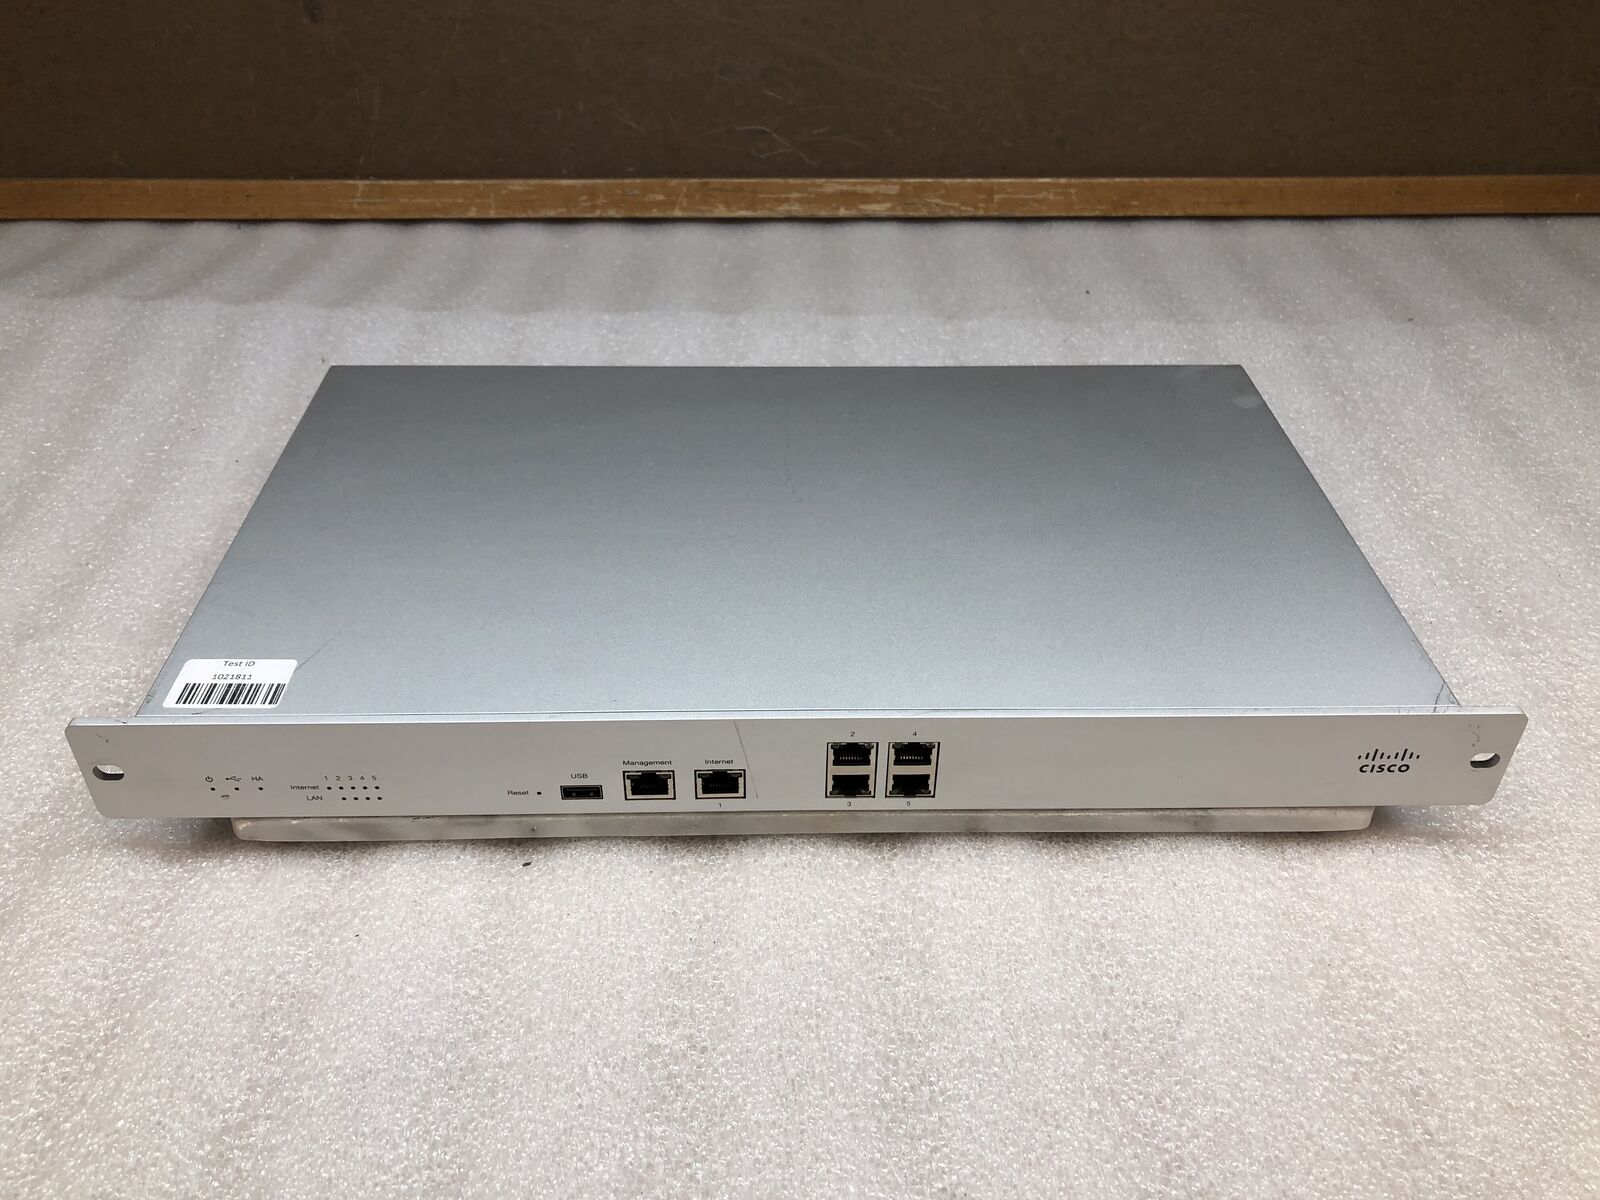 Cisco Meraki MX80 A80-17100 Cloud Managed Security Appliance UNCLAIMED TESTED